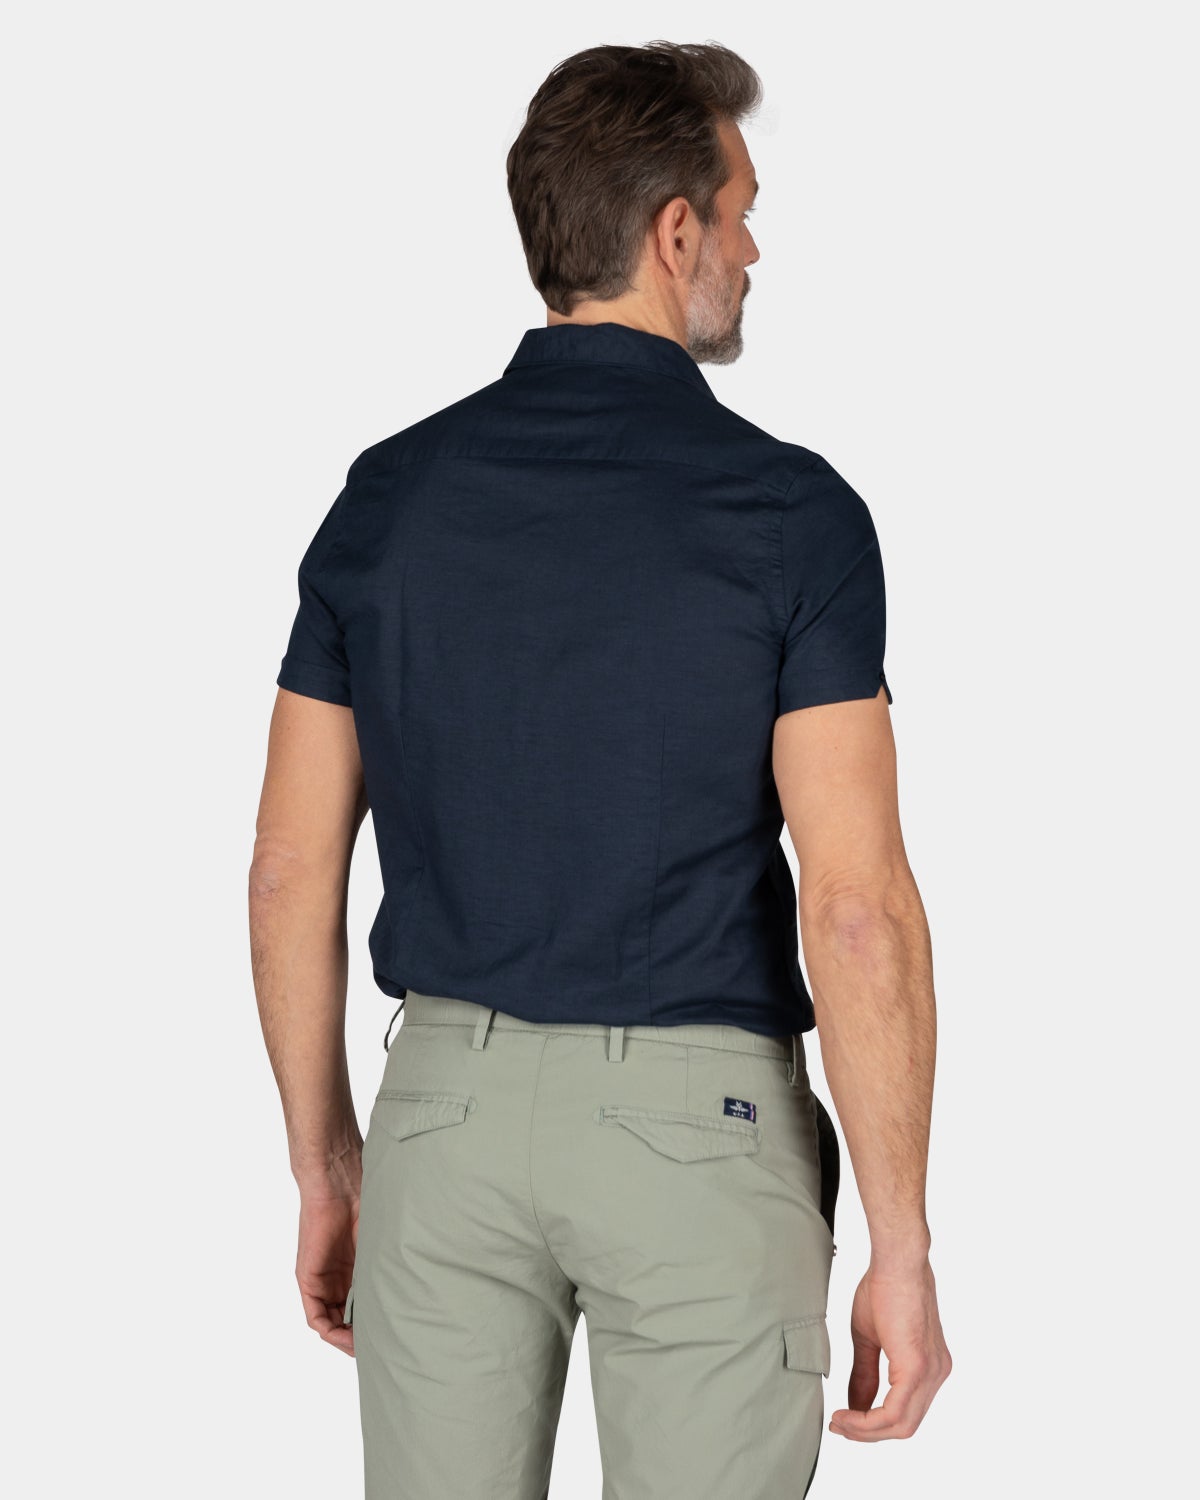 Plain shirt short sleeves - Traditional Navy